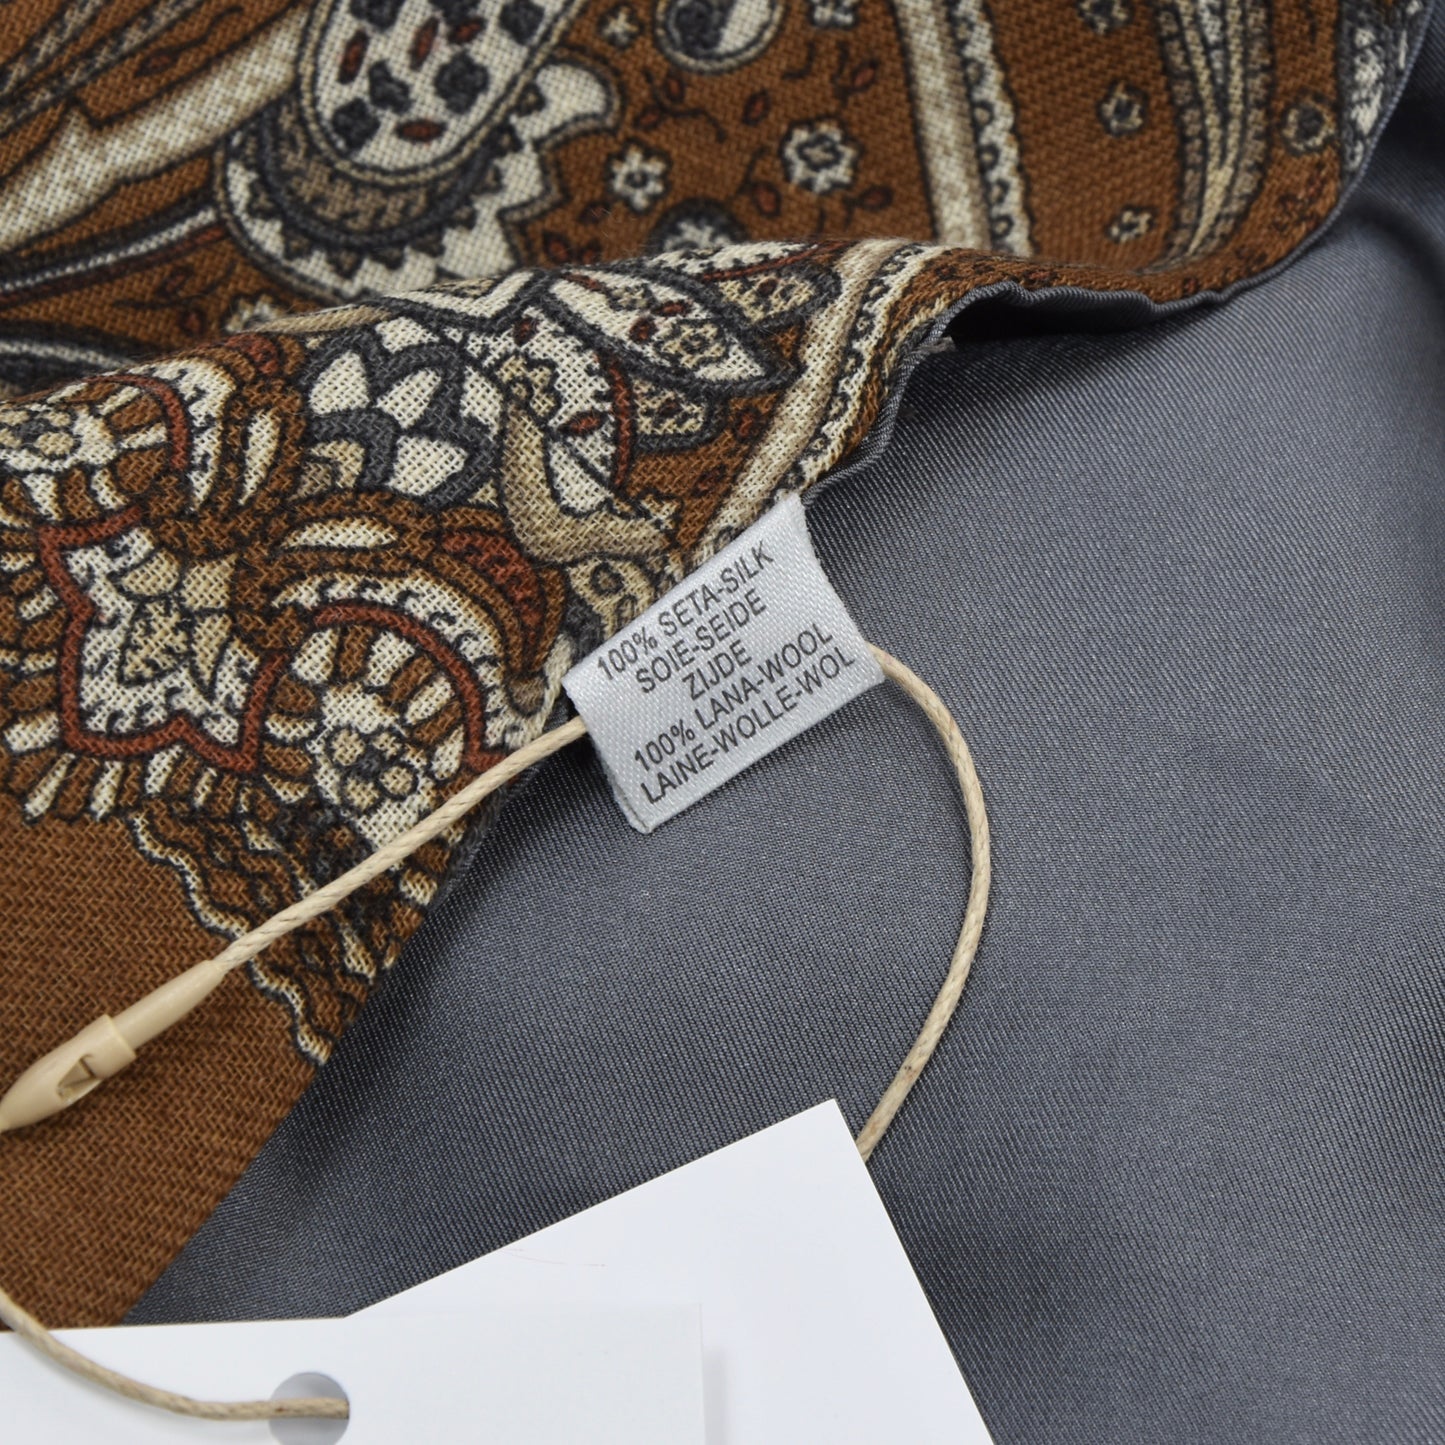 Codello Double-Sided Wool-Silk Dress Scarf 157cm - Paisley